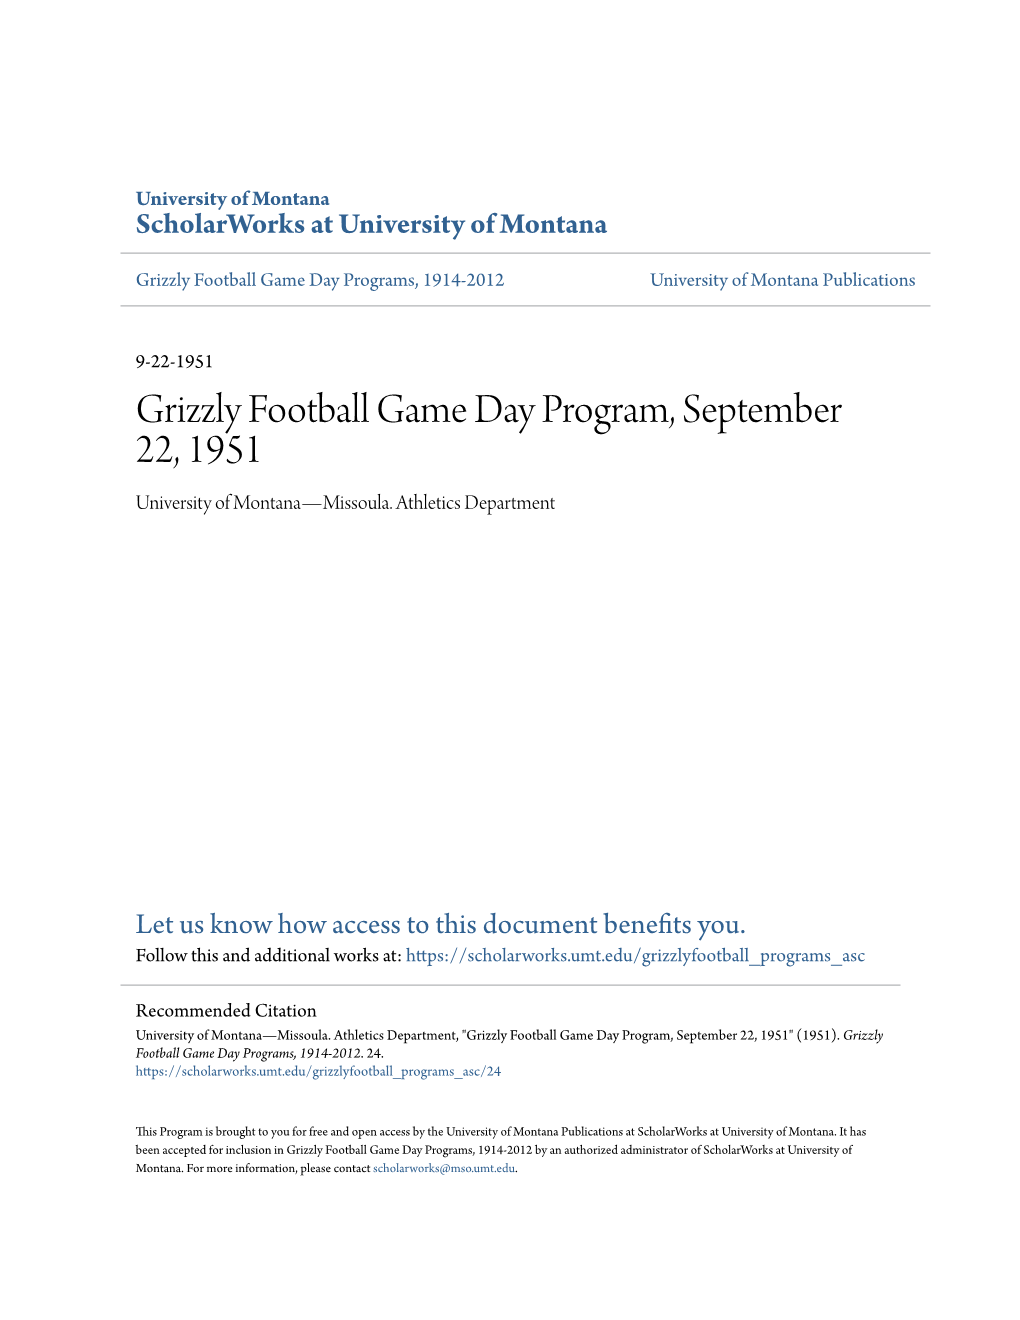 Grizzly Football Game Day Program, September 22, 1951 University of Montana—Missoula